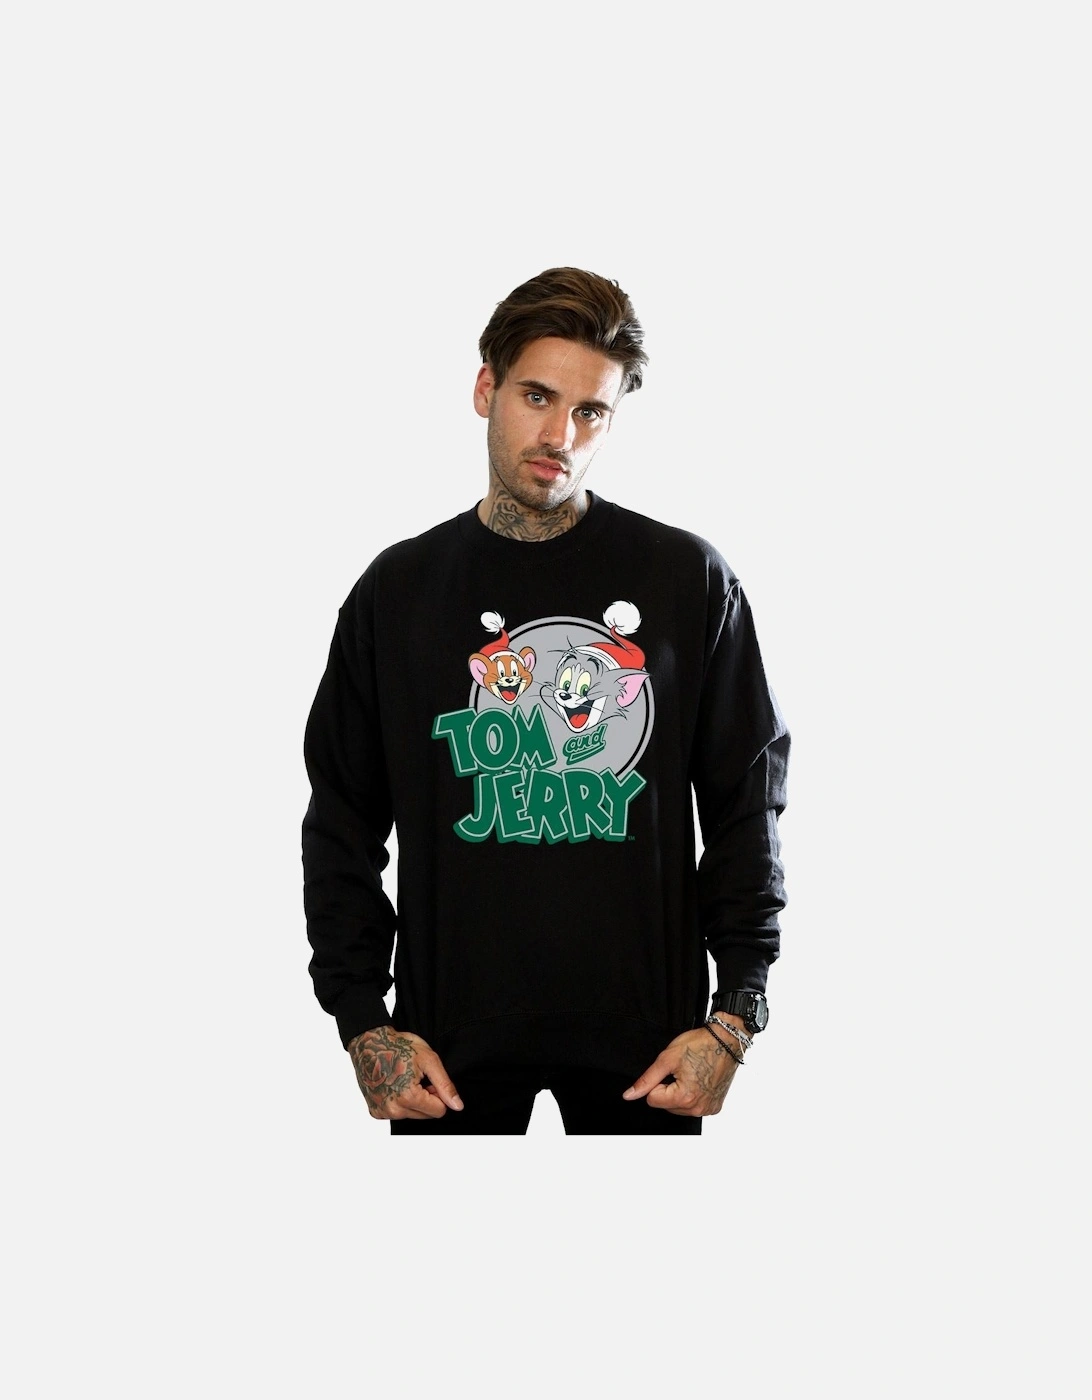 Tom And Jerry Mens Christmas Greetings Sweatshirt